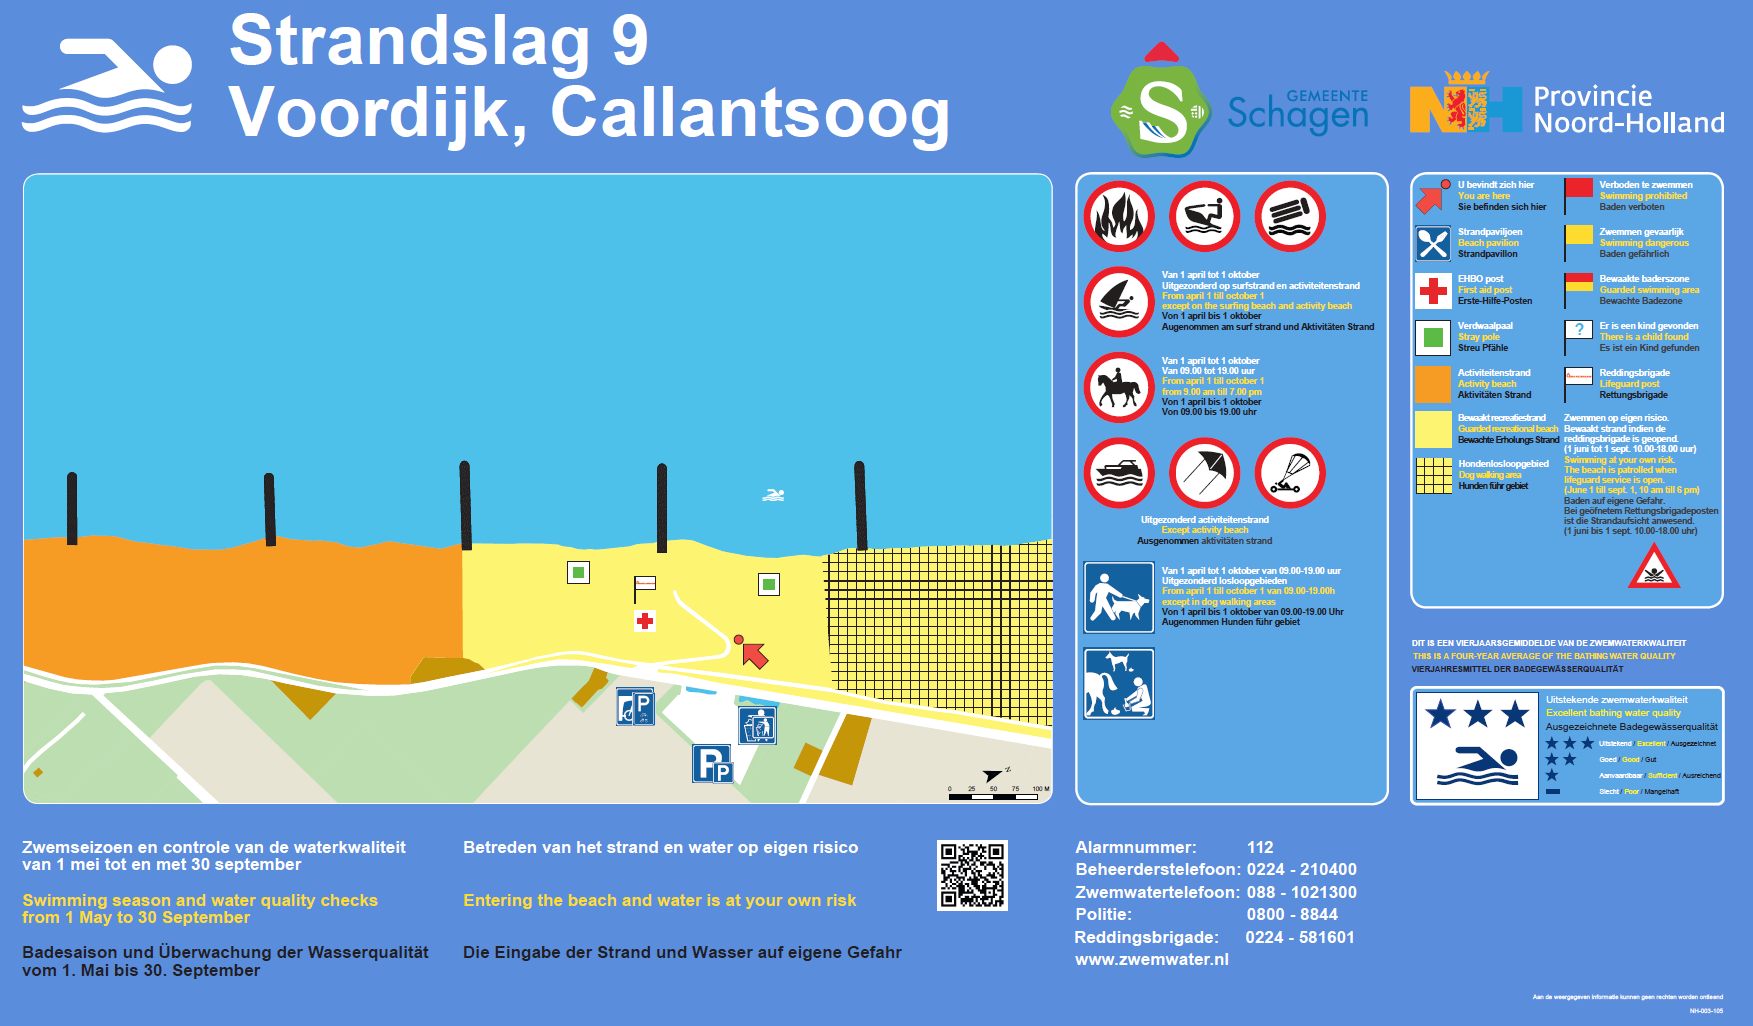 The information board at the swimming location Callantsoog, Strandslag 9 Voordijk